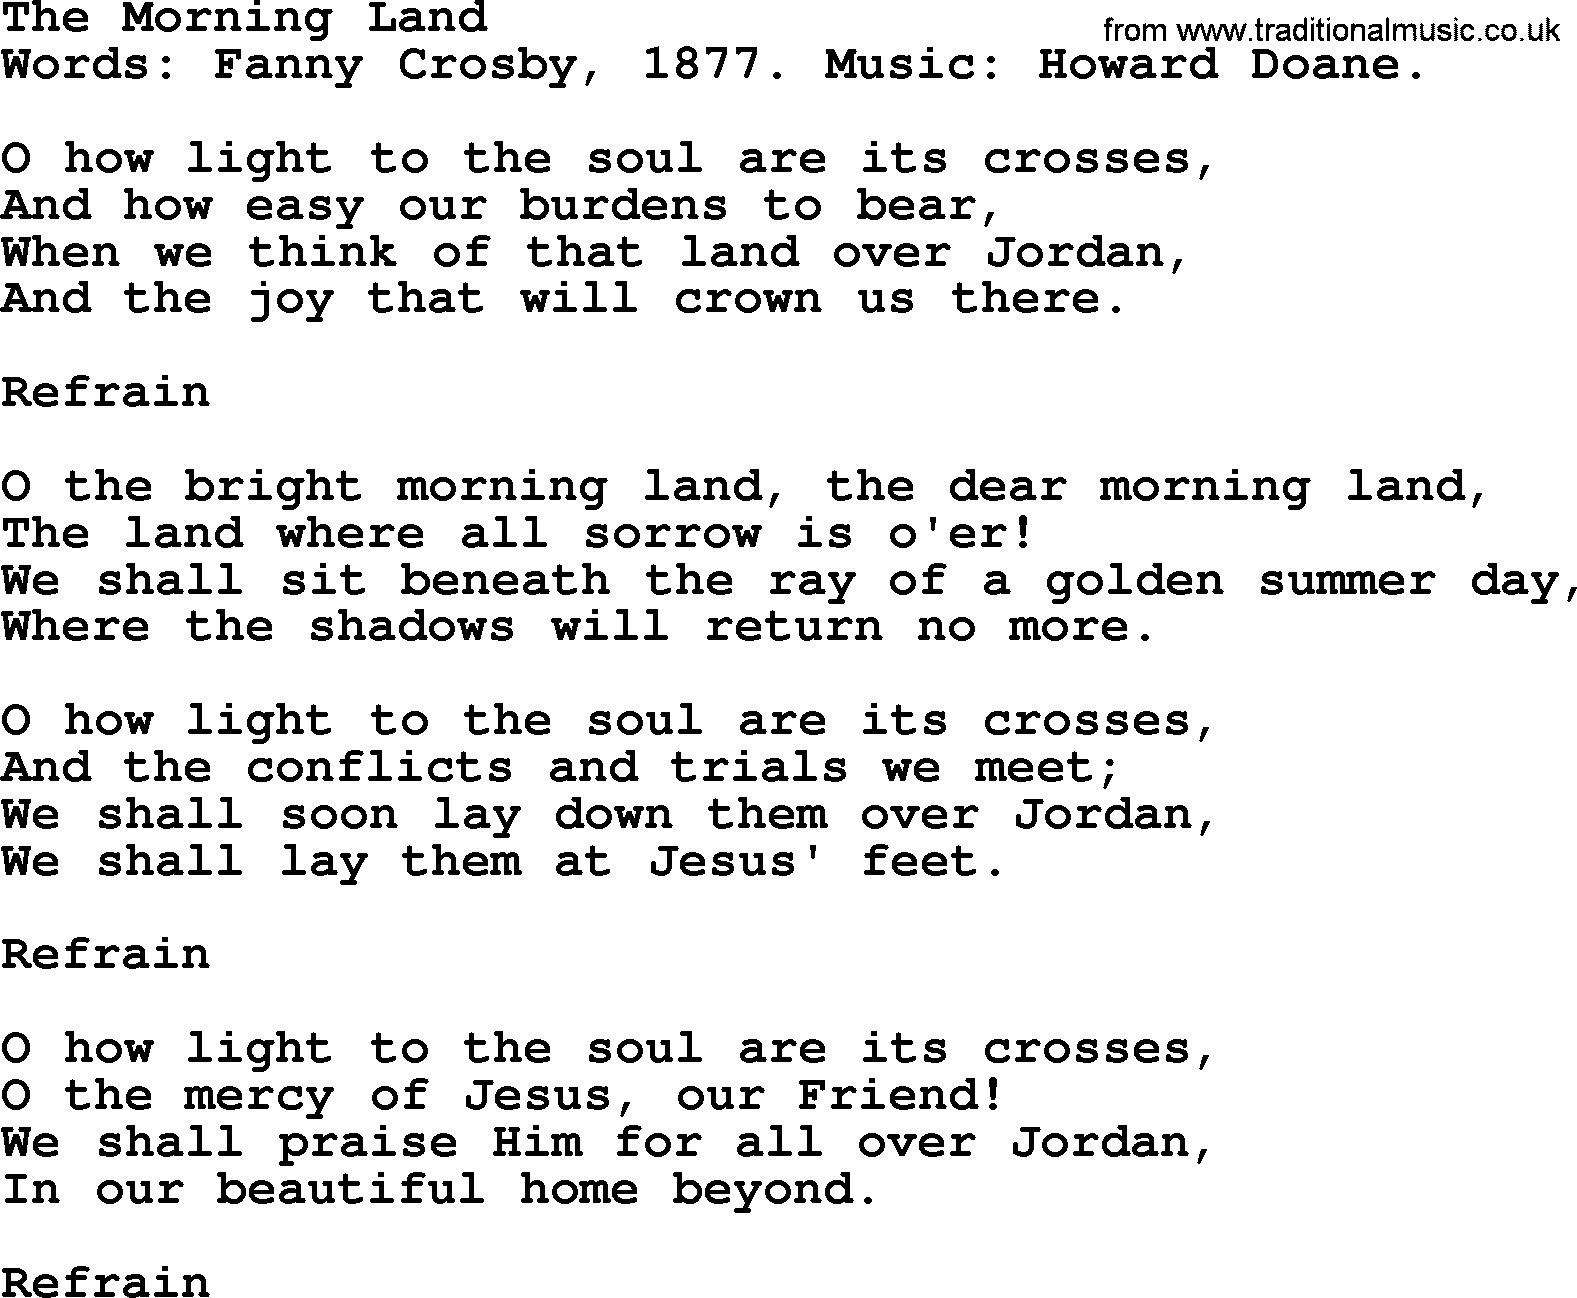 Fanny Crosby song: The Morning Land, lyrics